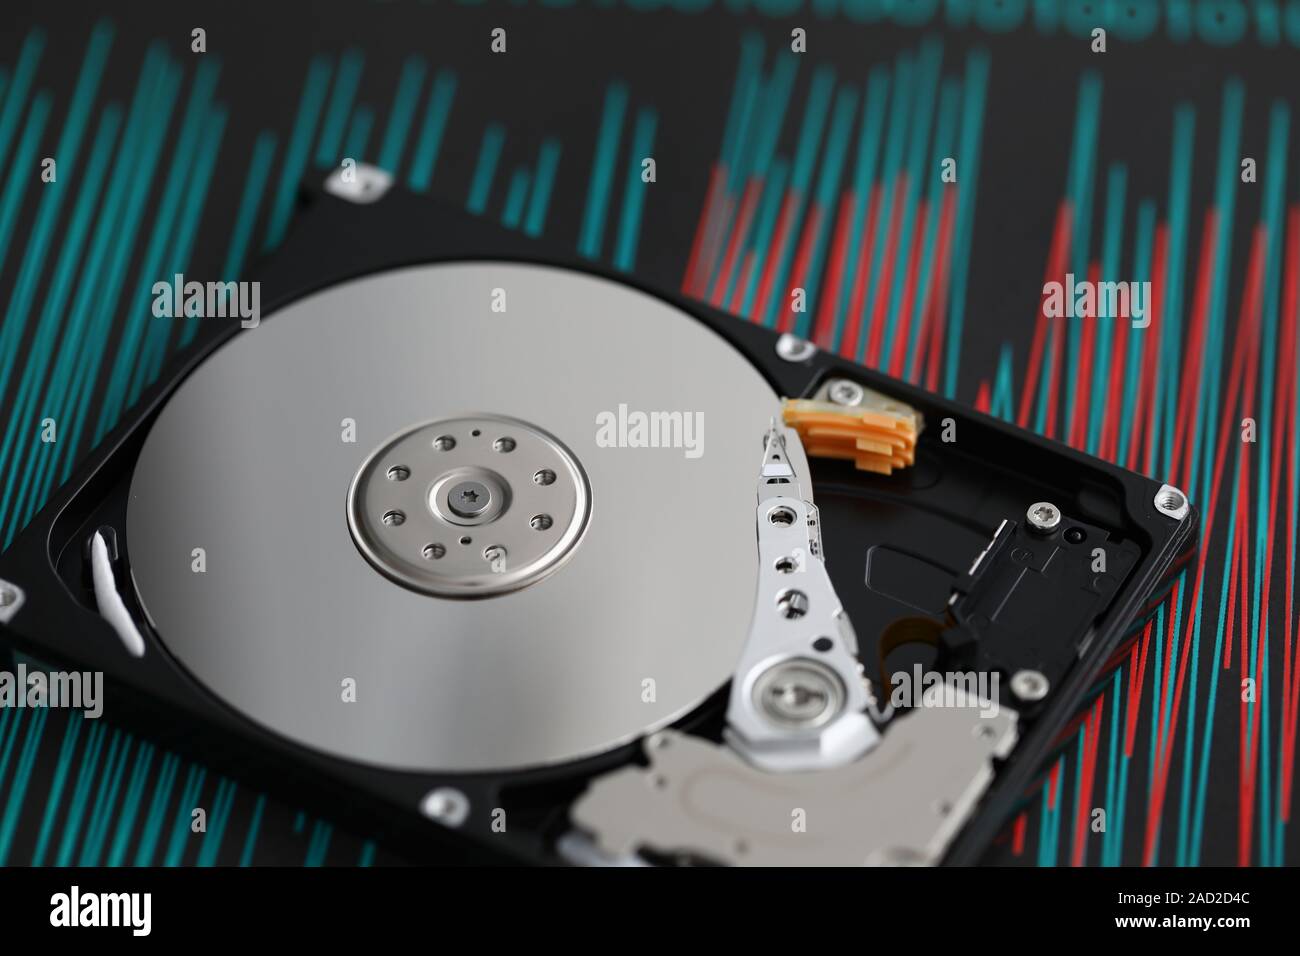 Hard drive disk Stock Photo - Alamy